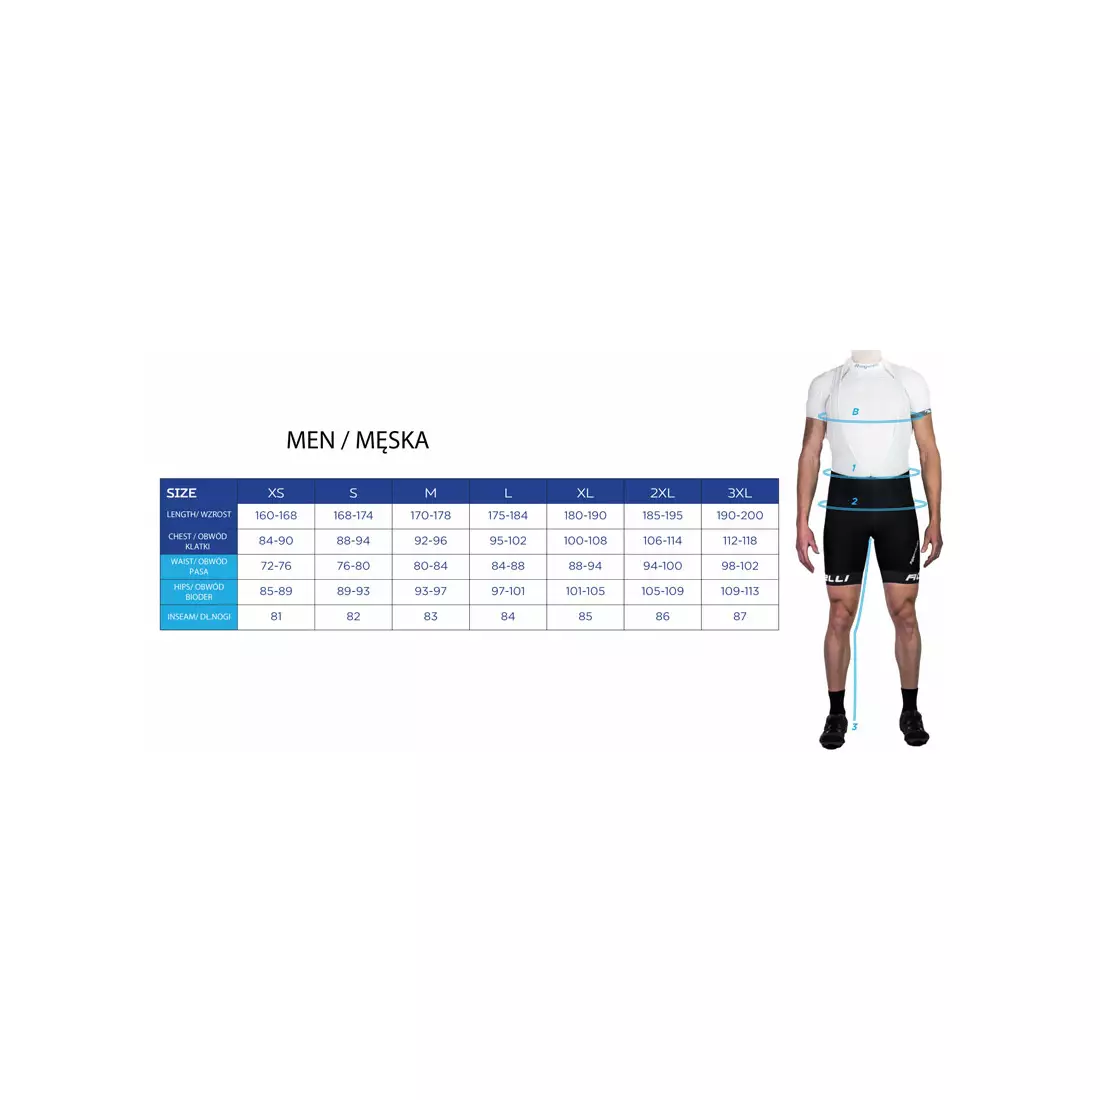 ROGELLI TRI FLORIDA 030.001 ținută de triatlon masculin, roșu și negru